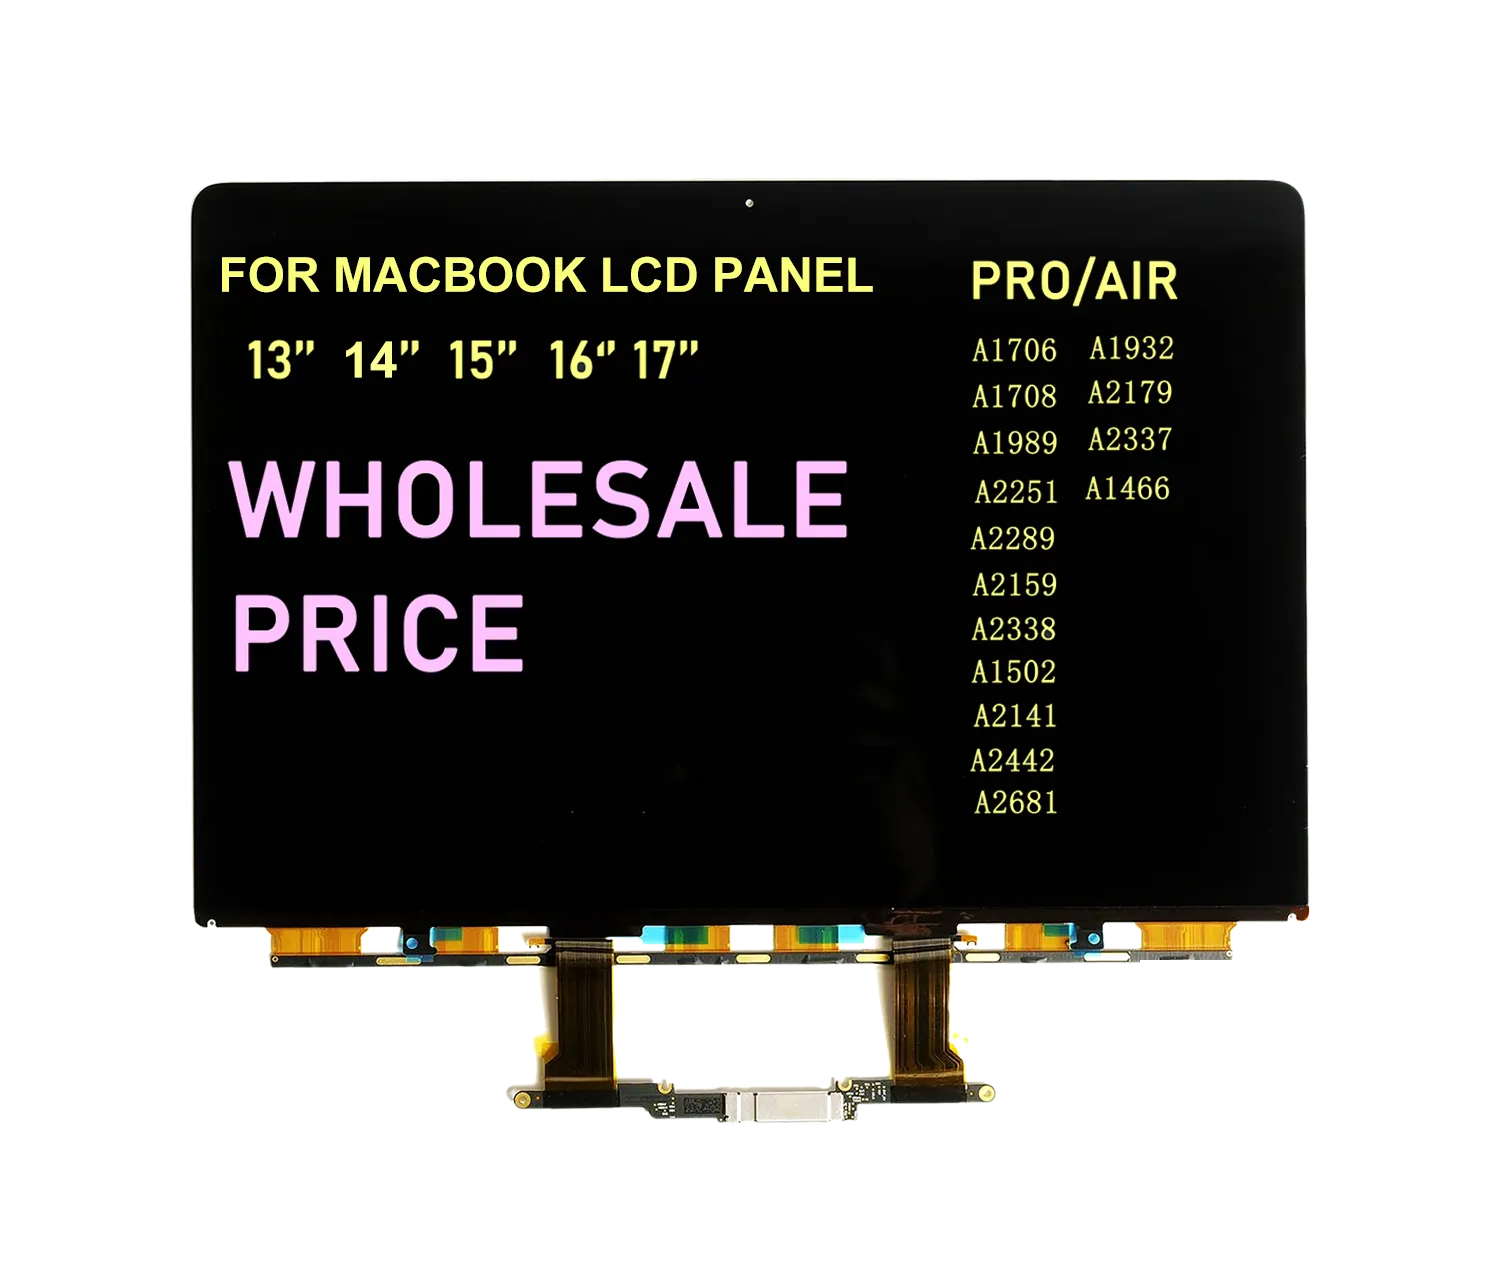 MacBook LCD panel